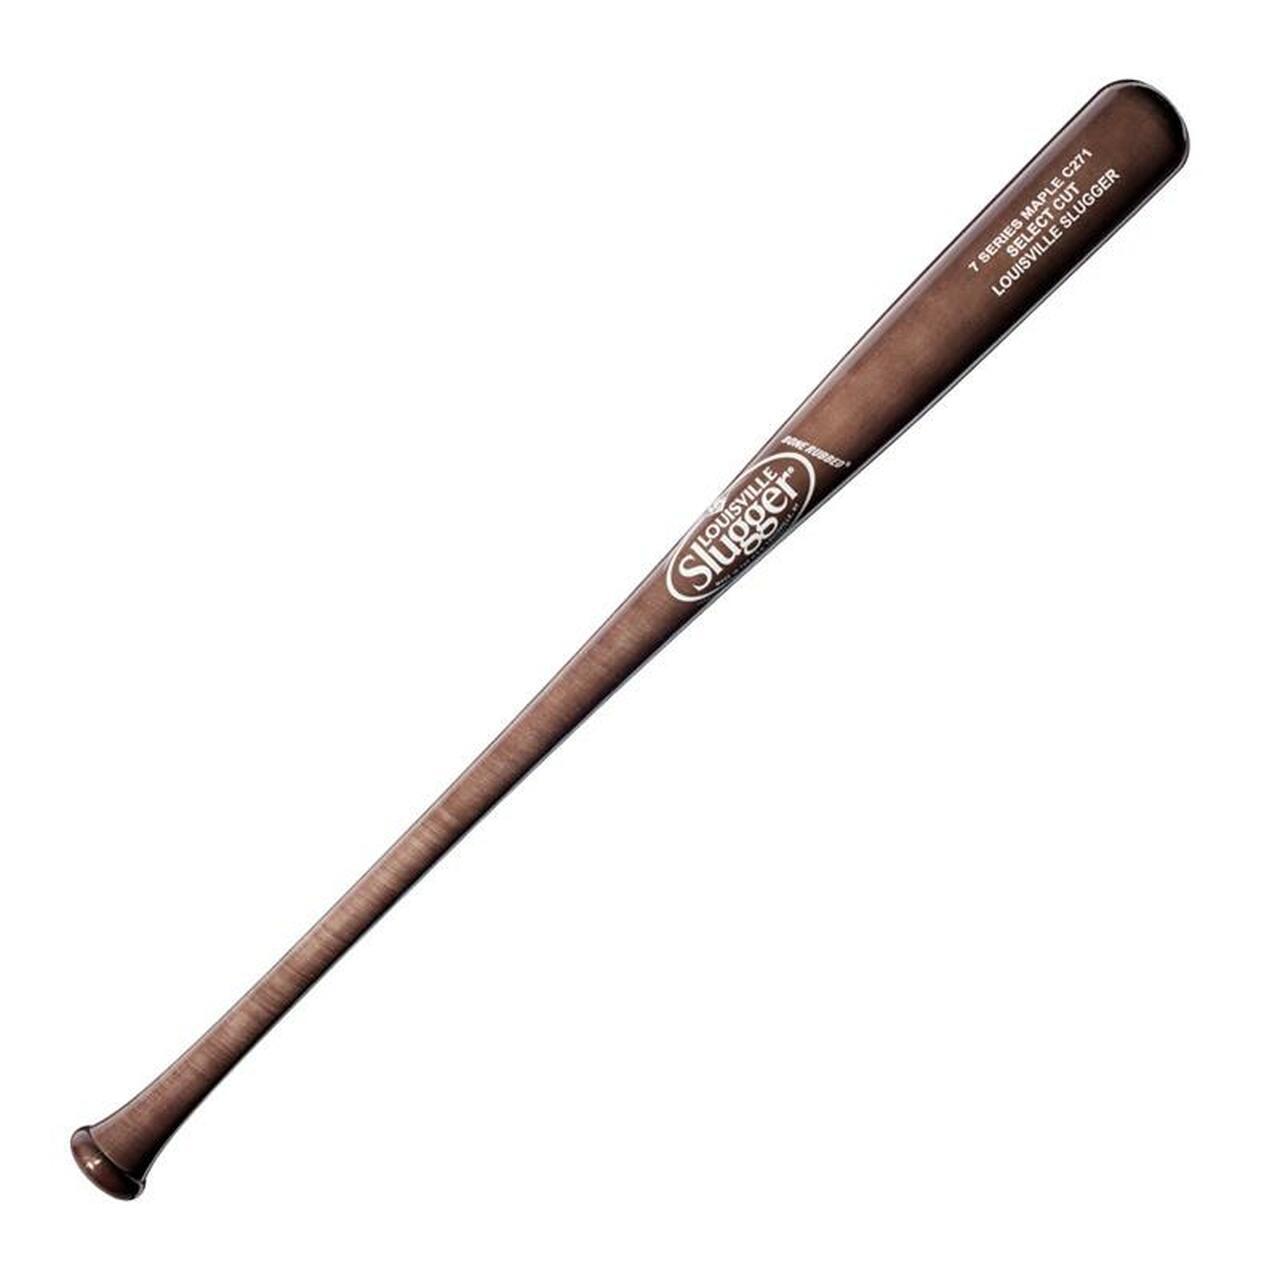 Louisville Slugger Mp C271 32/29 Baseball Bat for sale online -3 